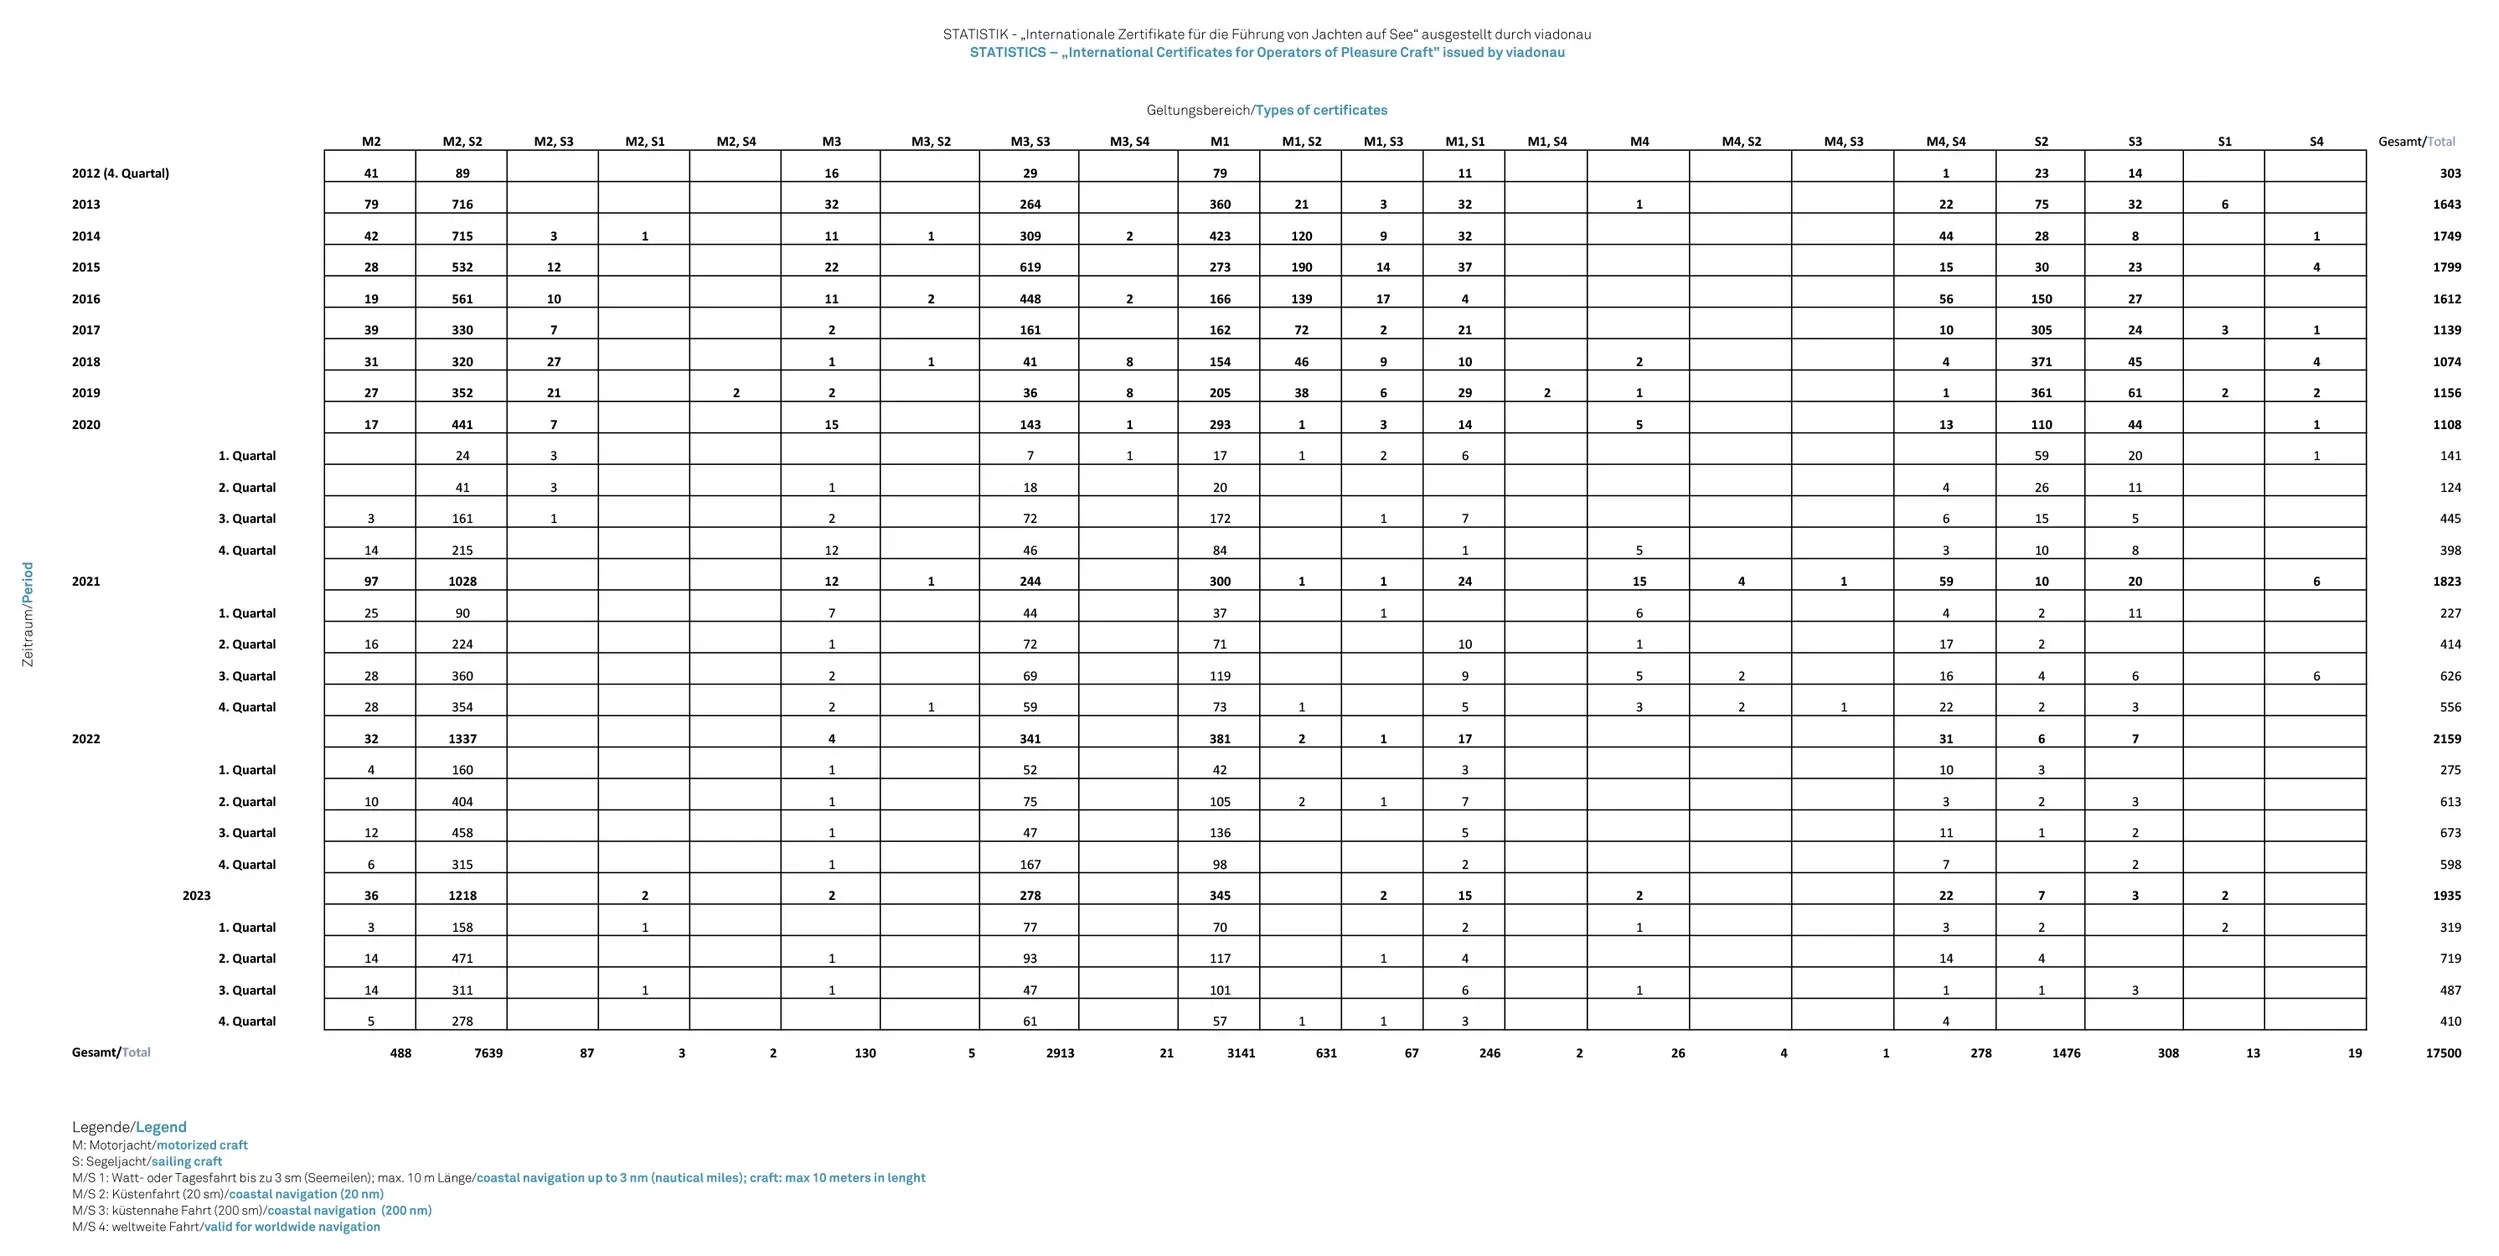 Statistics of yachtmaster licenses (table) 4/2023, source: viadonau